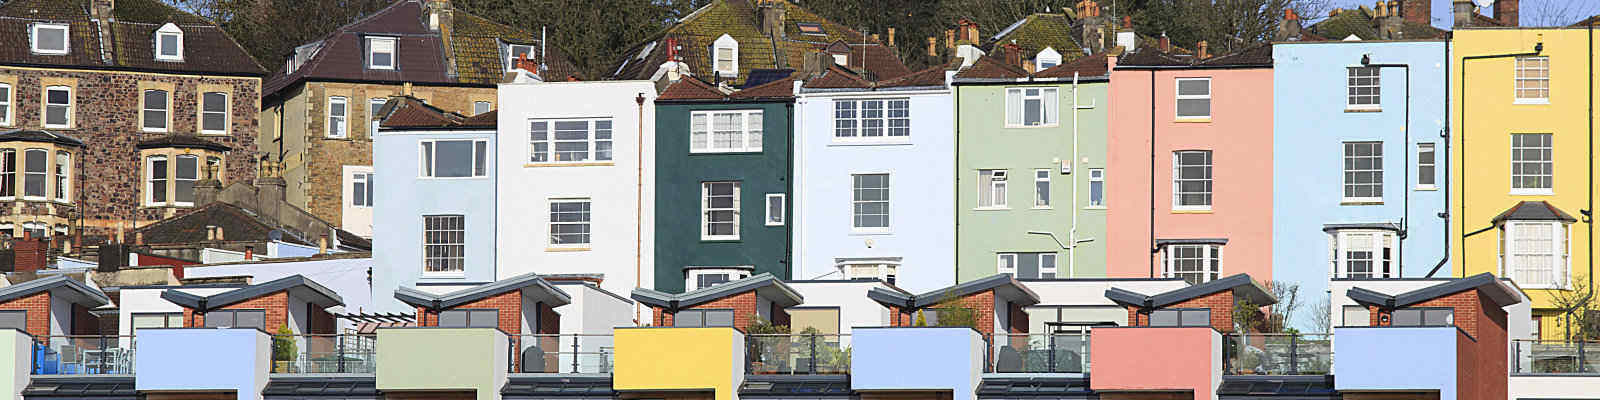 Mortgage-for-returning-expat-to-buy-UK-property